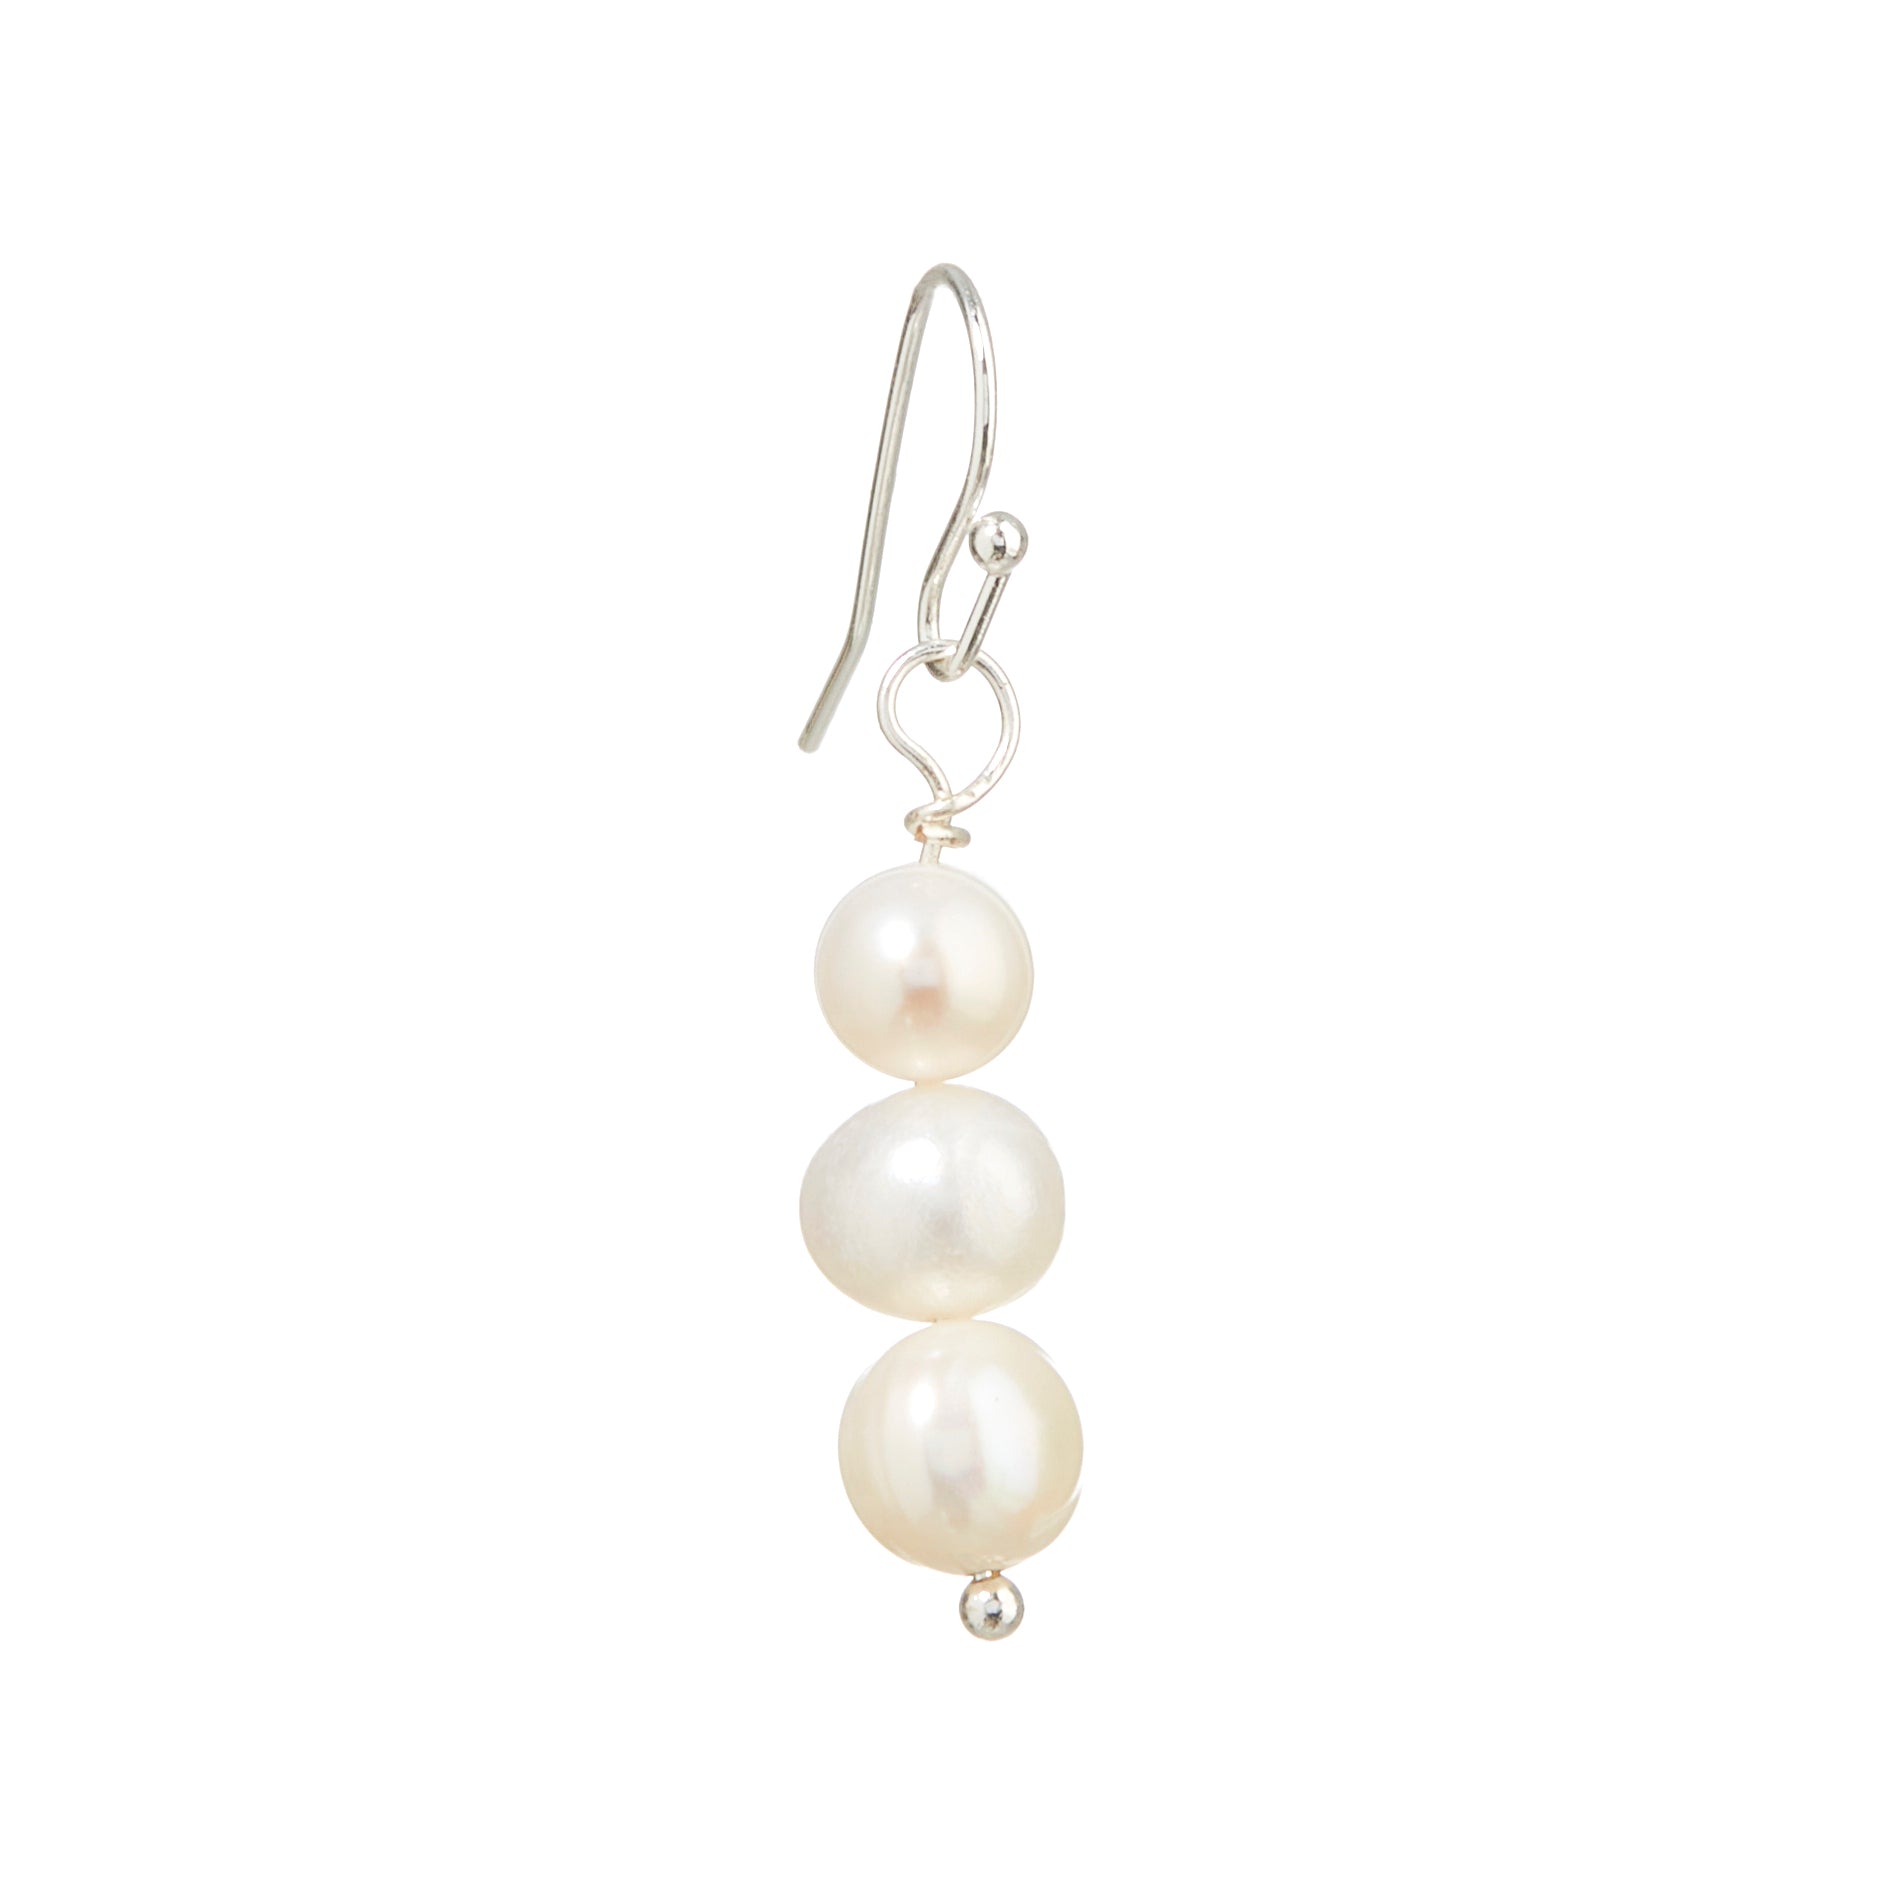 Freshwater pearls - 25 pcs, 8 mm